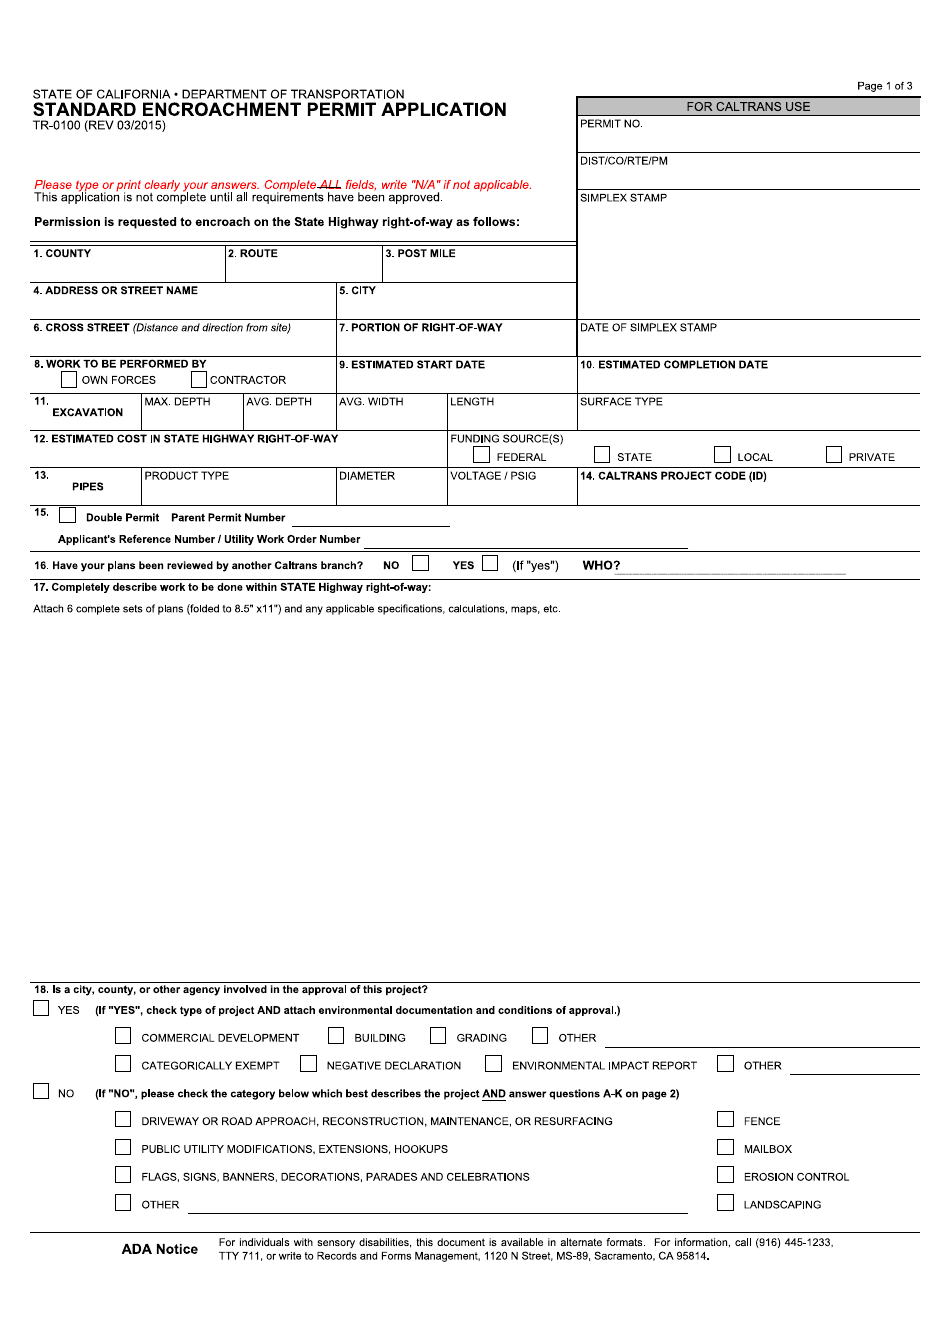 Form TR-0100 Standard Encroachment Permit Application - California, Page 1